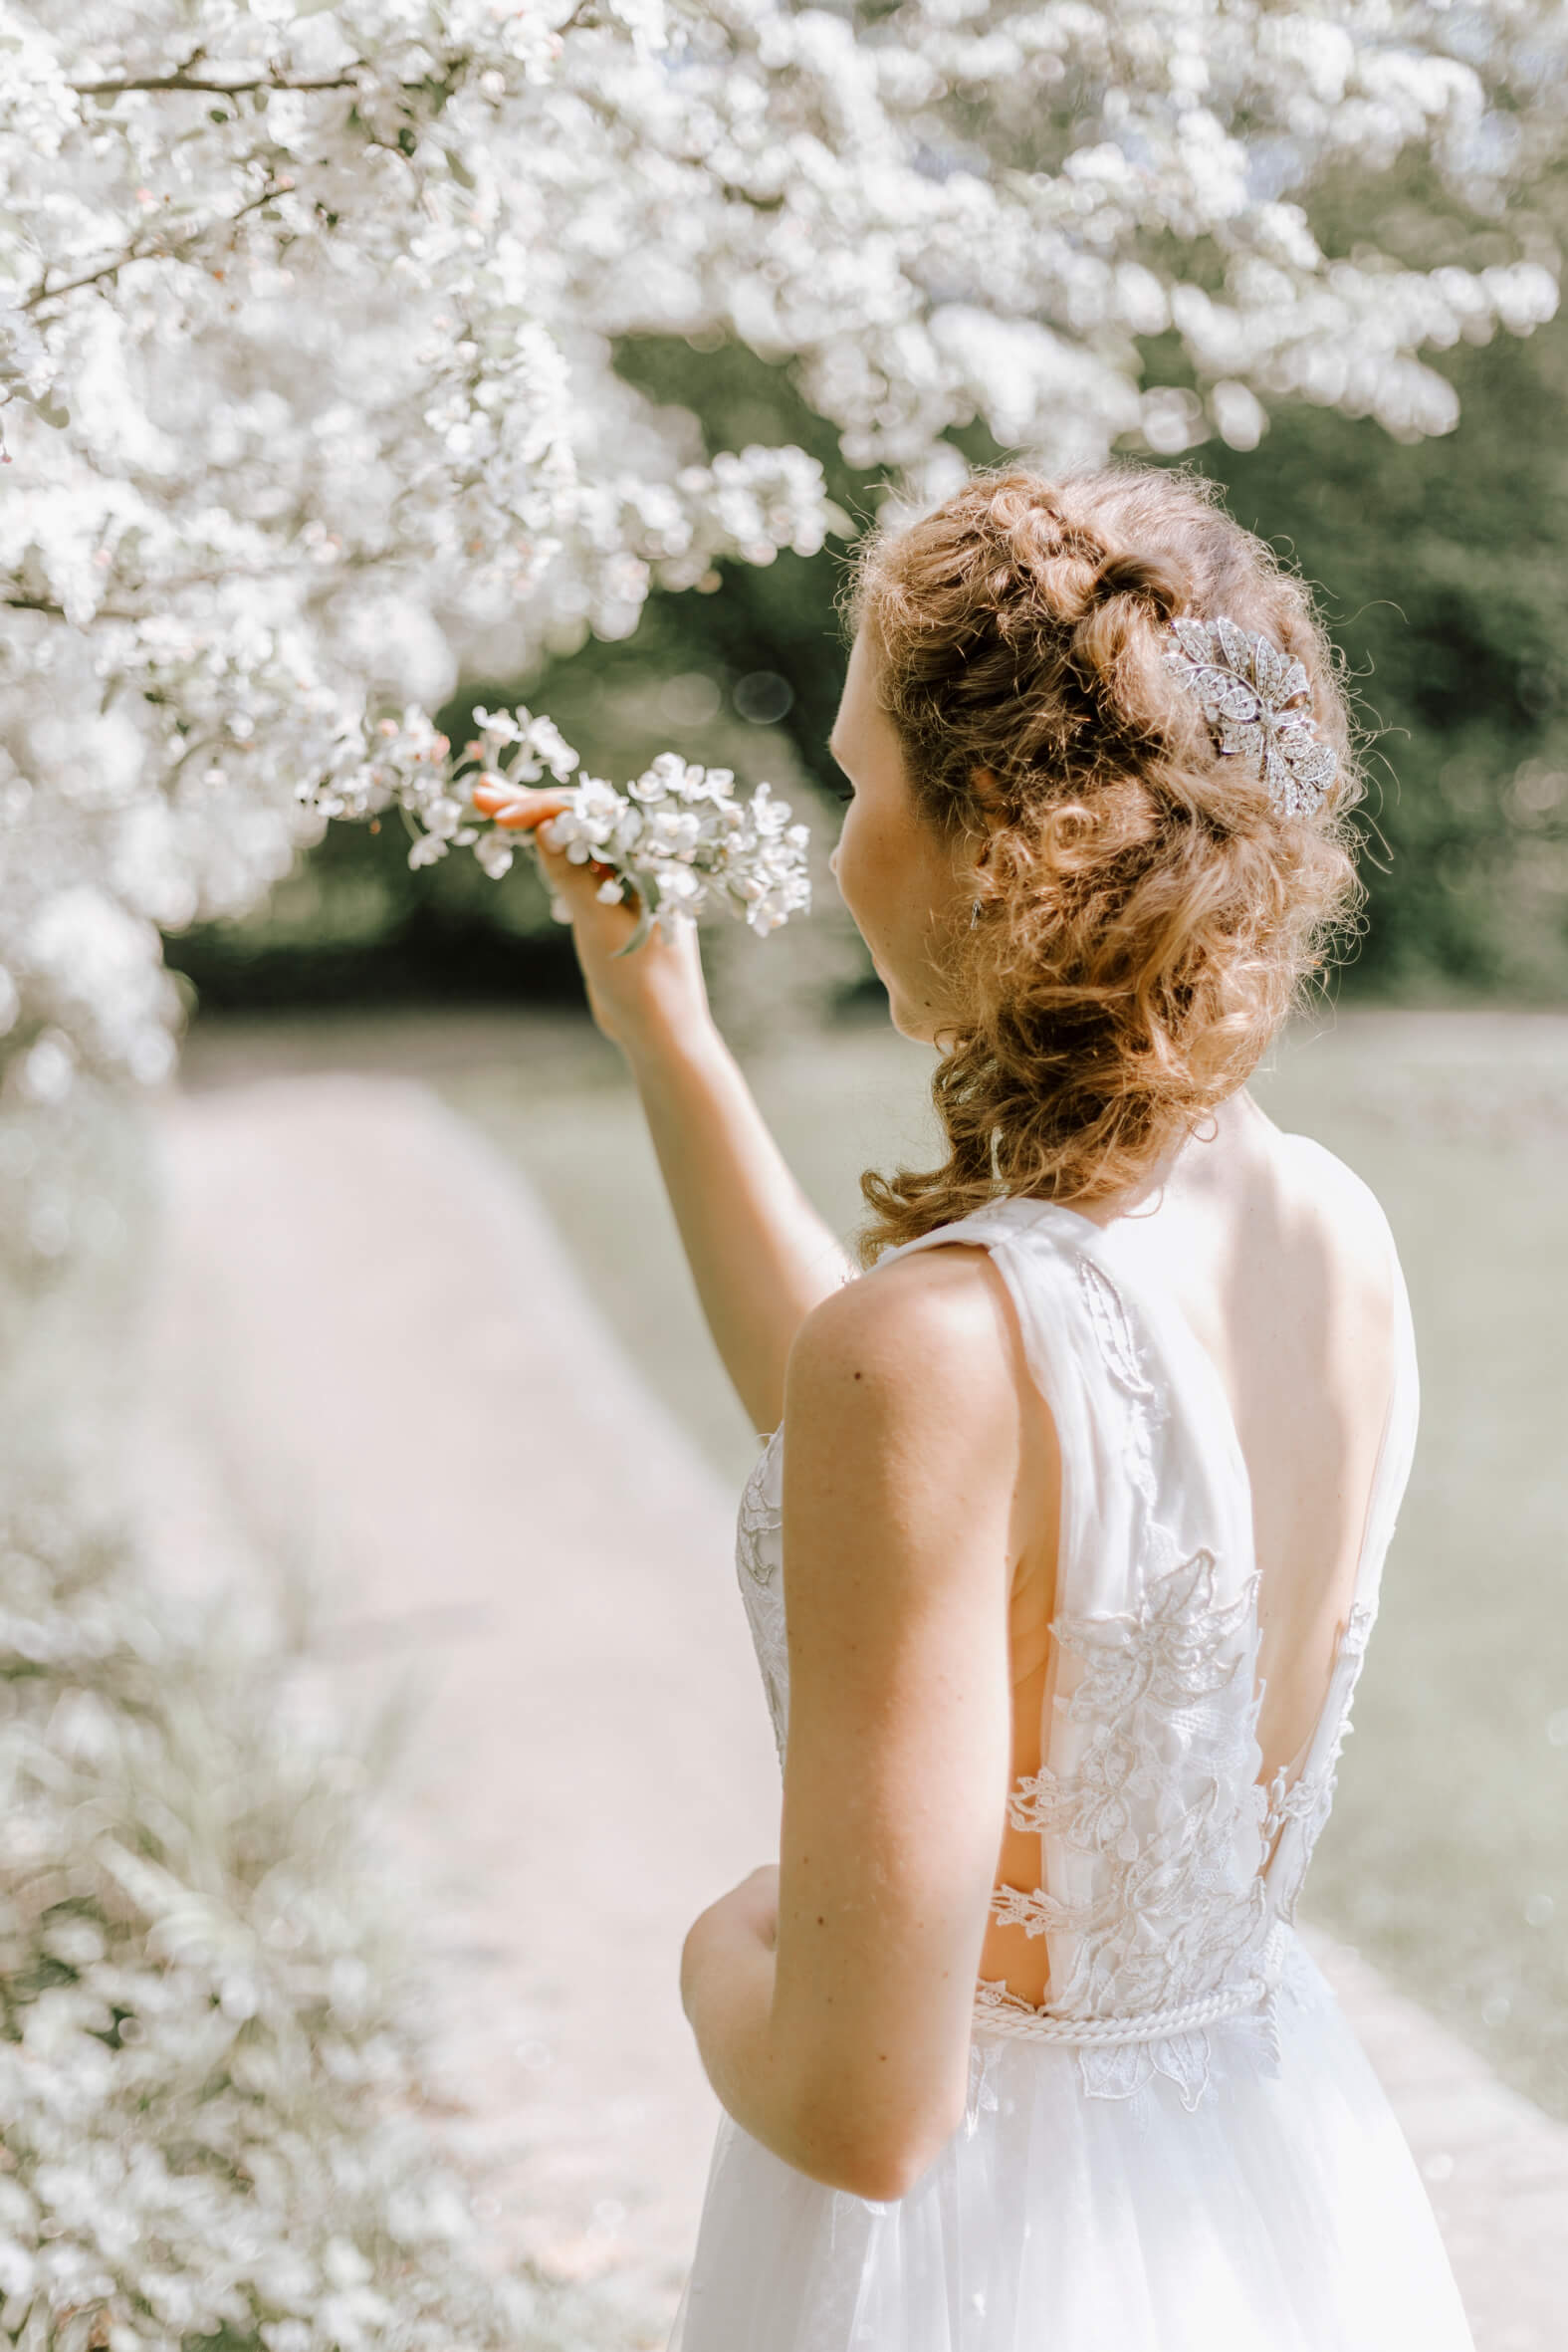 Wedding-Update-best-of-my-wedding-gown-from-inmaculada-garcia-shooting-kationette-fashionblogger-nrw-wedding-2018